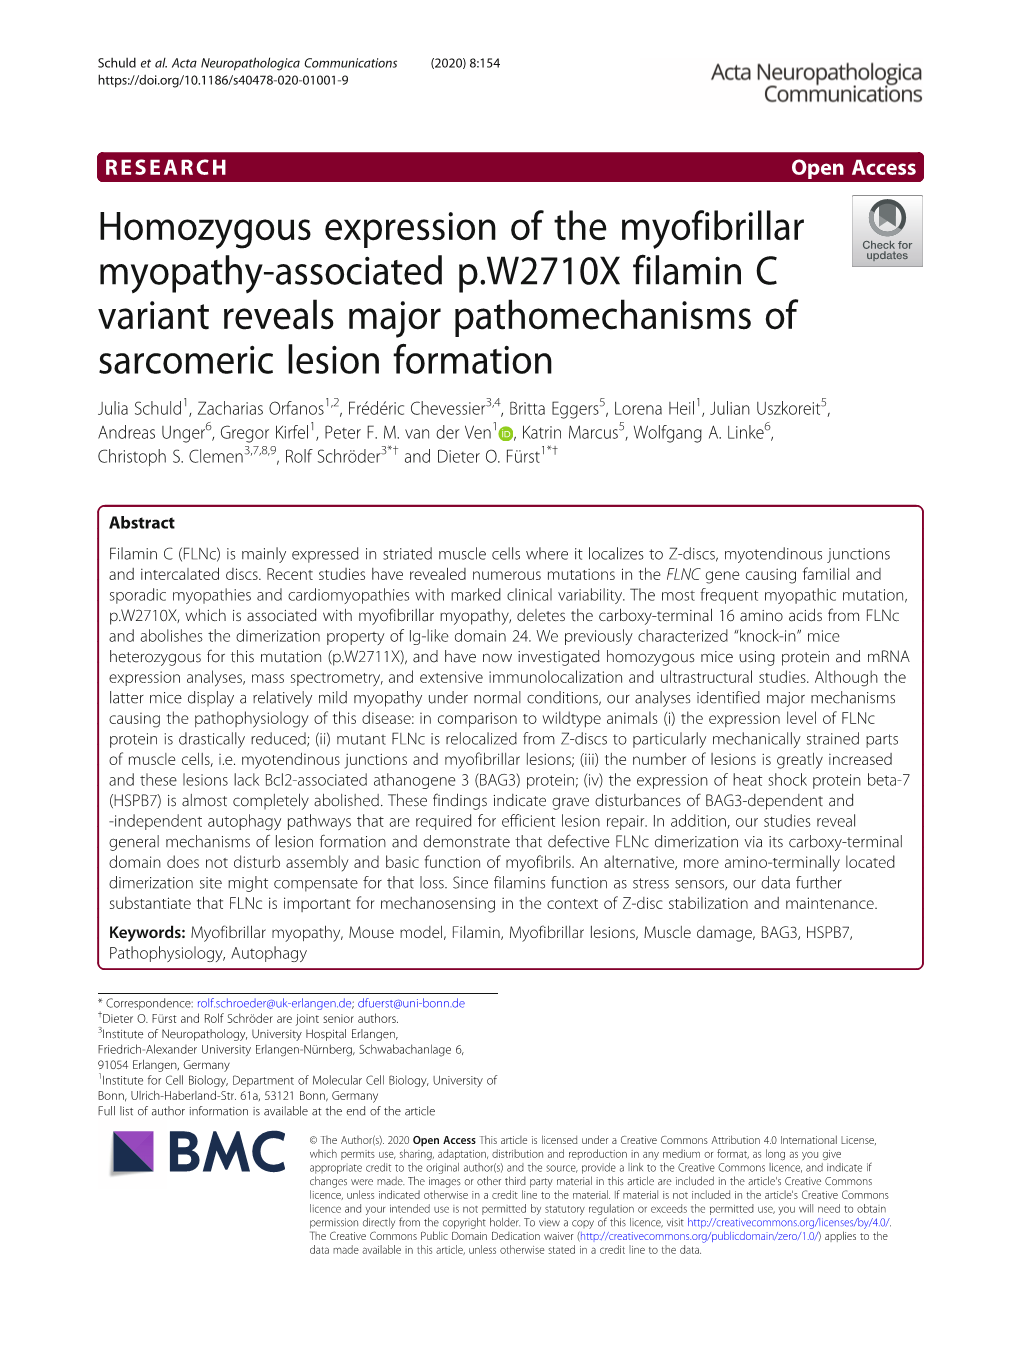 Homozygous Expression of the Myofibrillar Myopathy-Associated P.W2710X Filamin C Variant Reveals Major Pathomechanisms of Sarcom